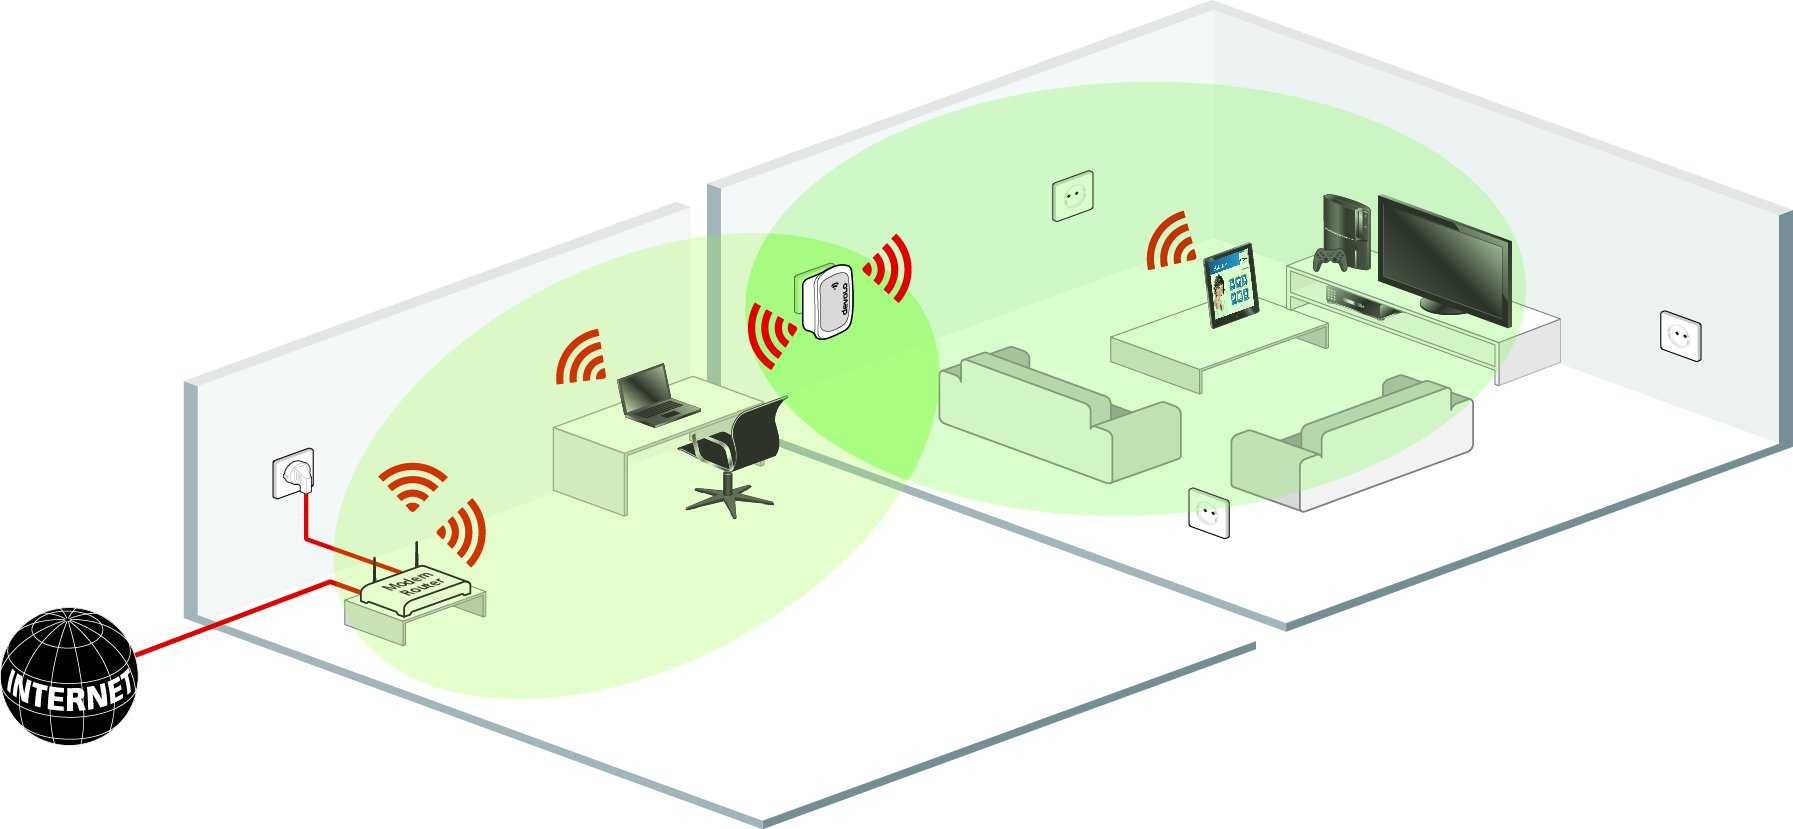 Балу вай фай. Усилитель WIFI сигнала для роутера беспроводной. Усилитель WIFI сигнала схема подключения. Wi-Fi усилитель сигнала (репитер). Wi-Fi усилитель сигнала 2,4g WIFI репитер.